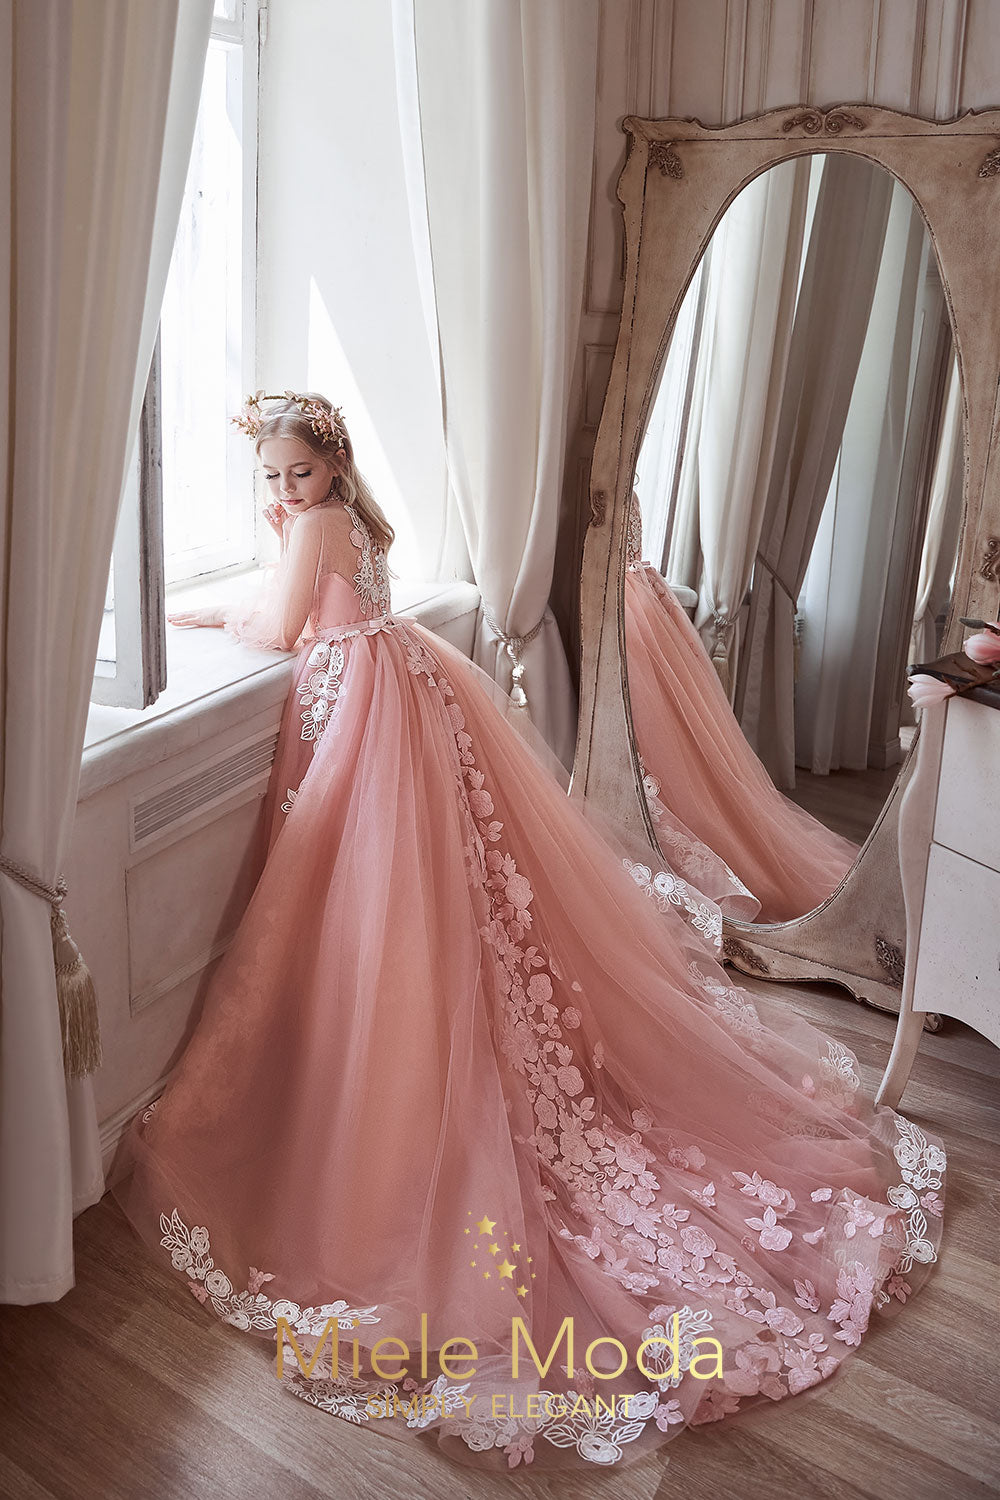 Miele Moda Galina Flower Girl Couture Dress